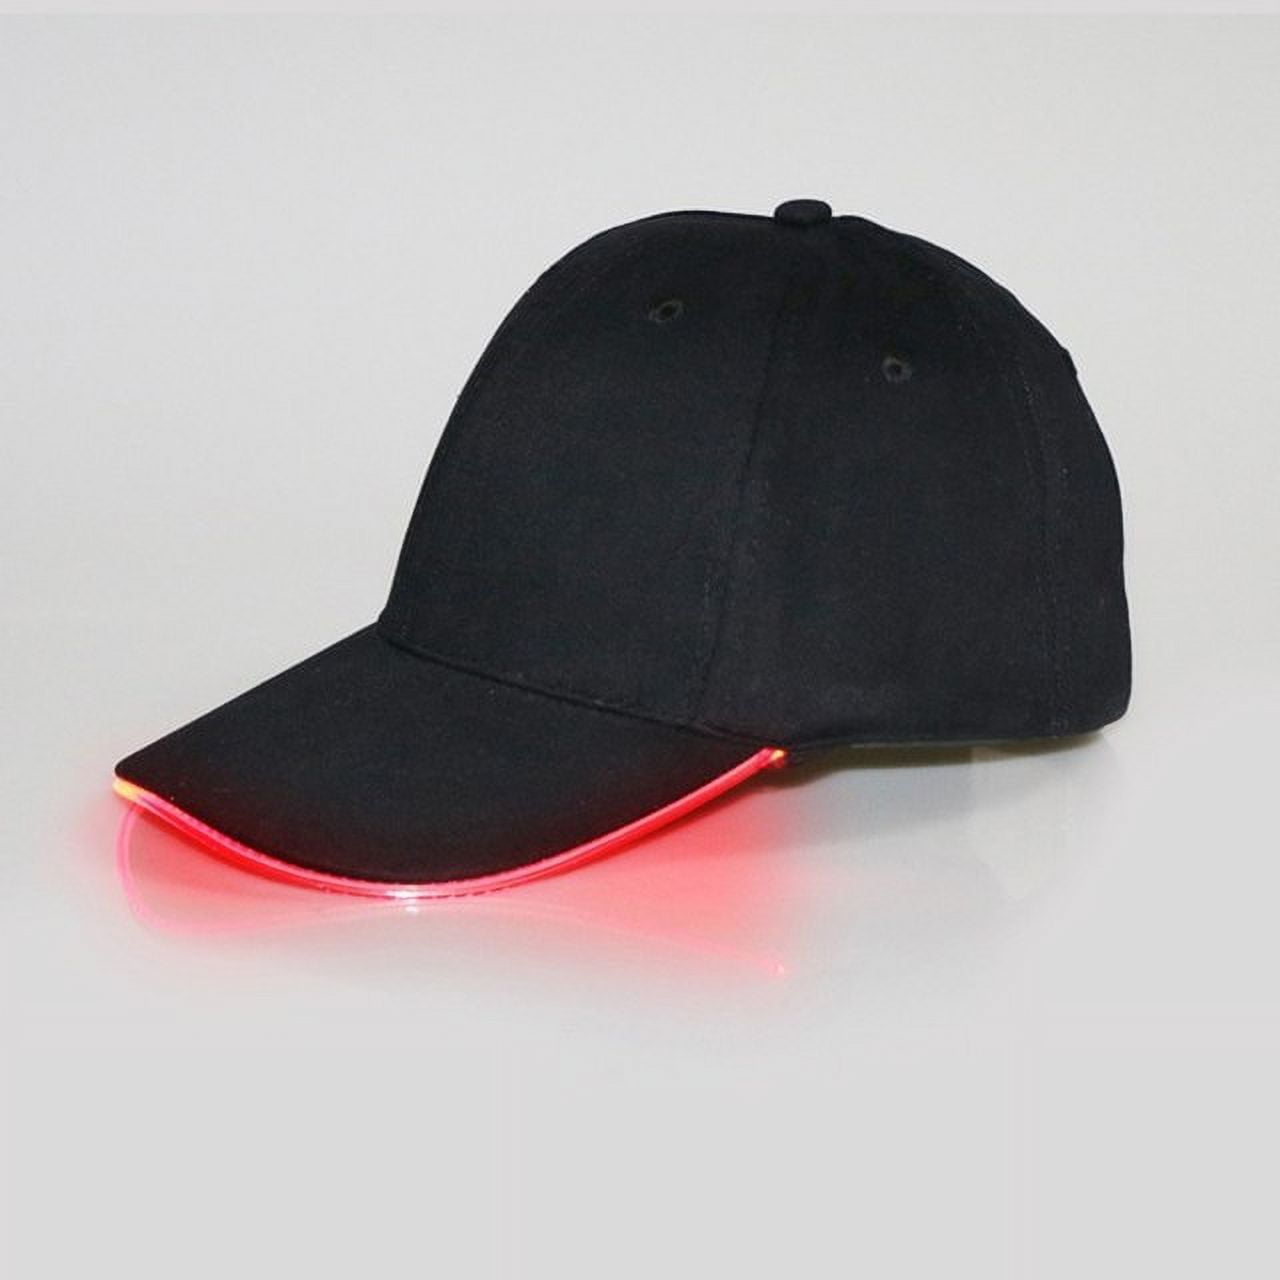 CoCopeaunts New LED Light Up Baseball Cap Glowing Adjustable Sun